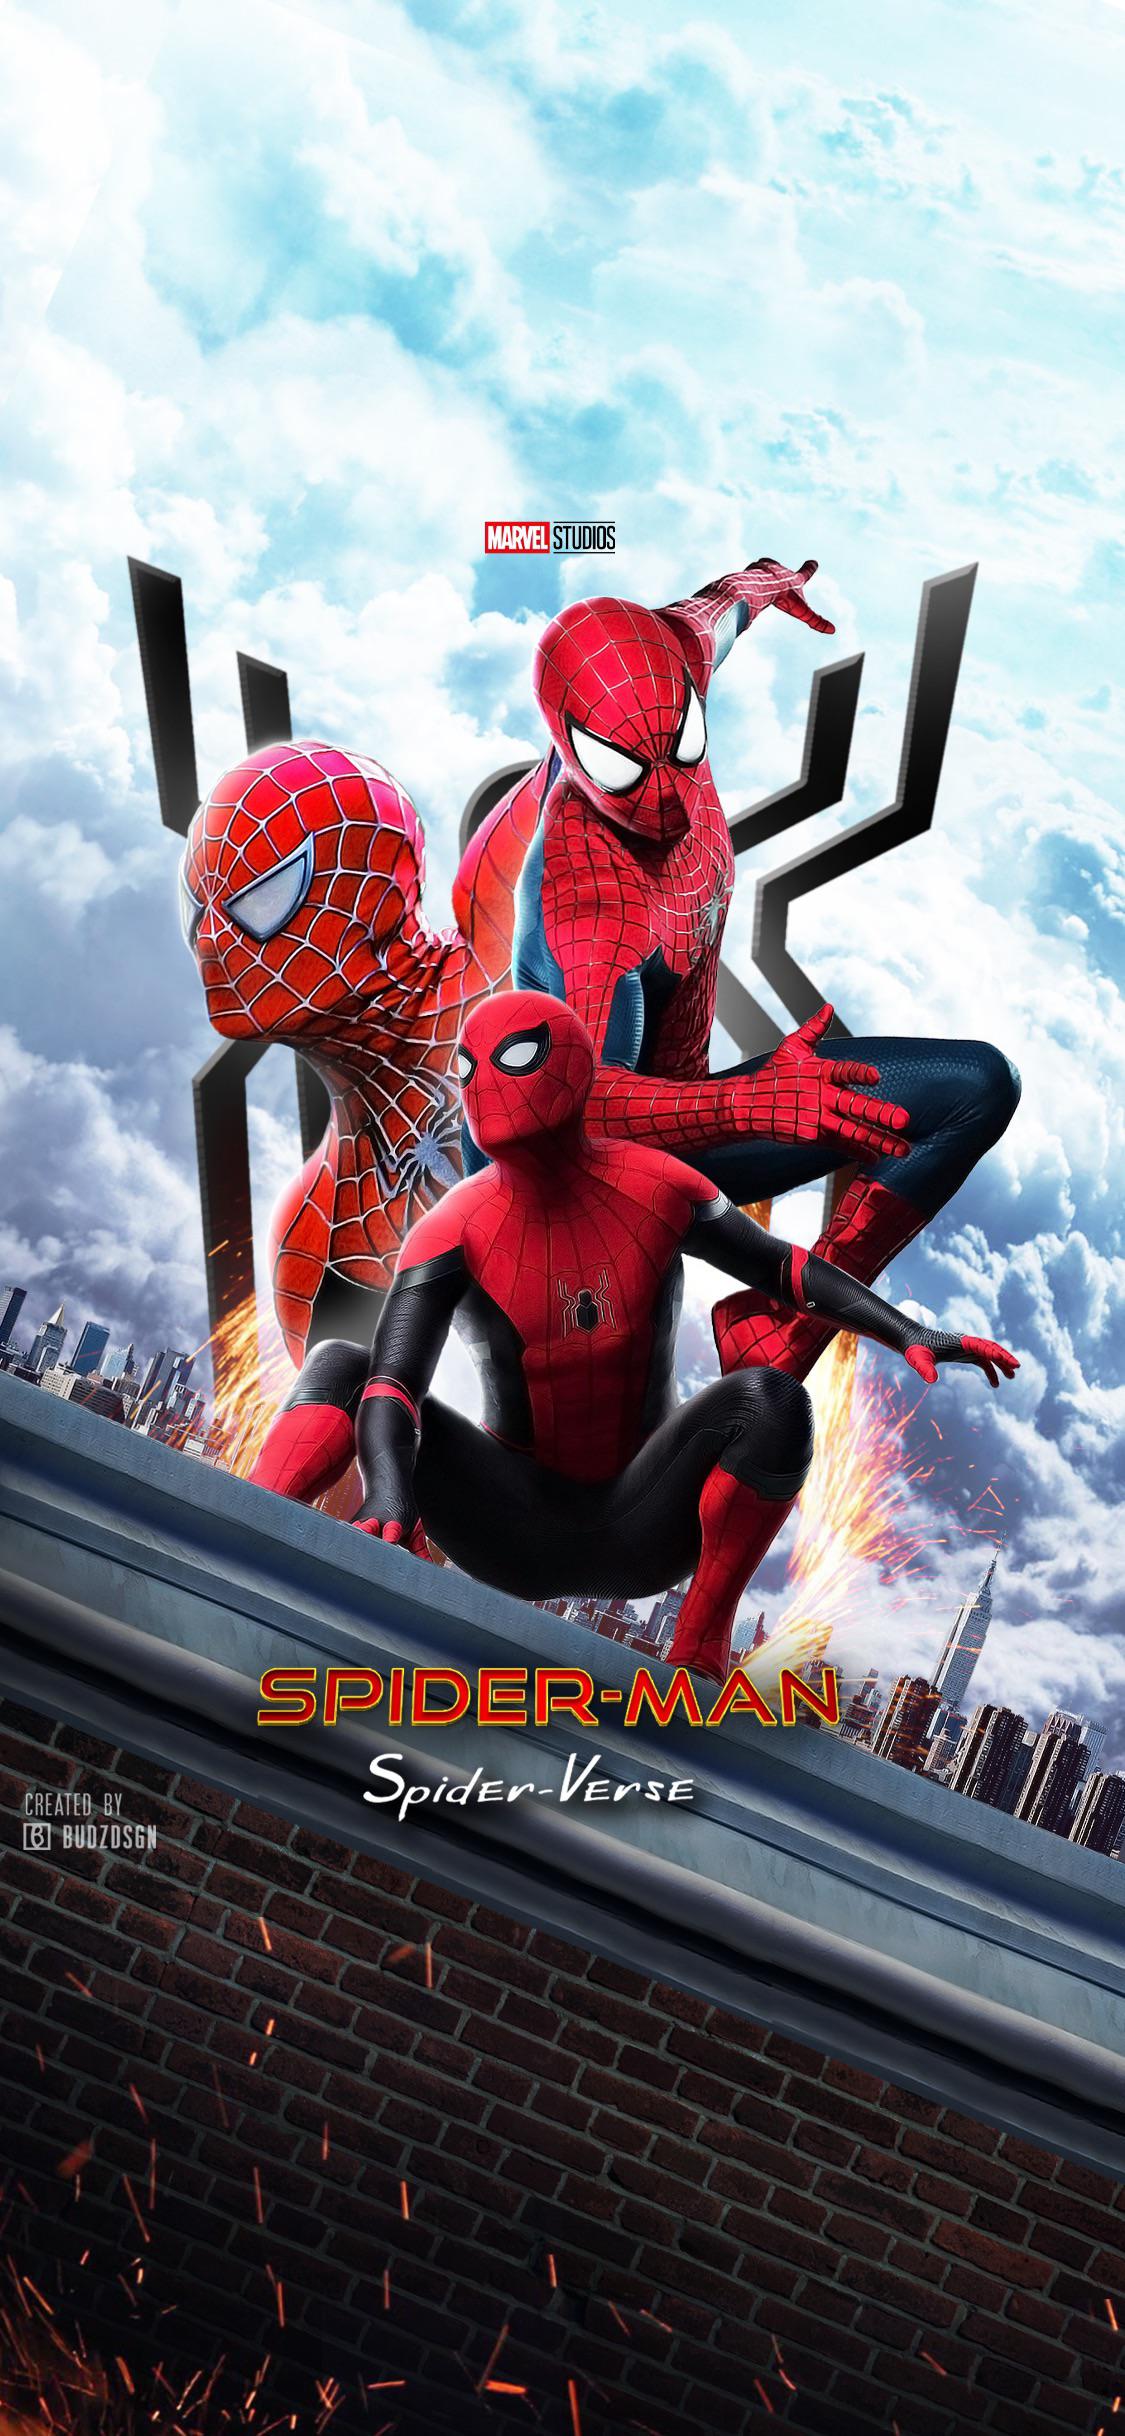 Spider Man 3 Movie Poster Concept + Wallpaper [ On Insta]